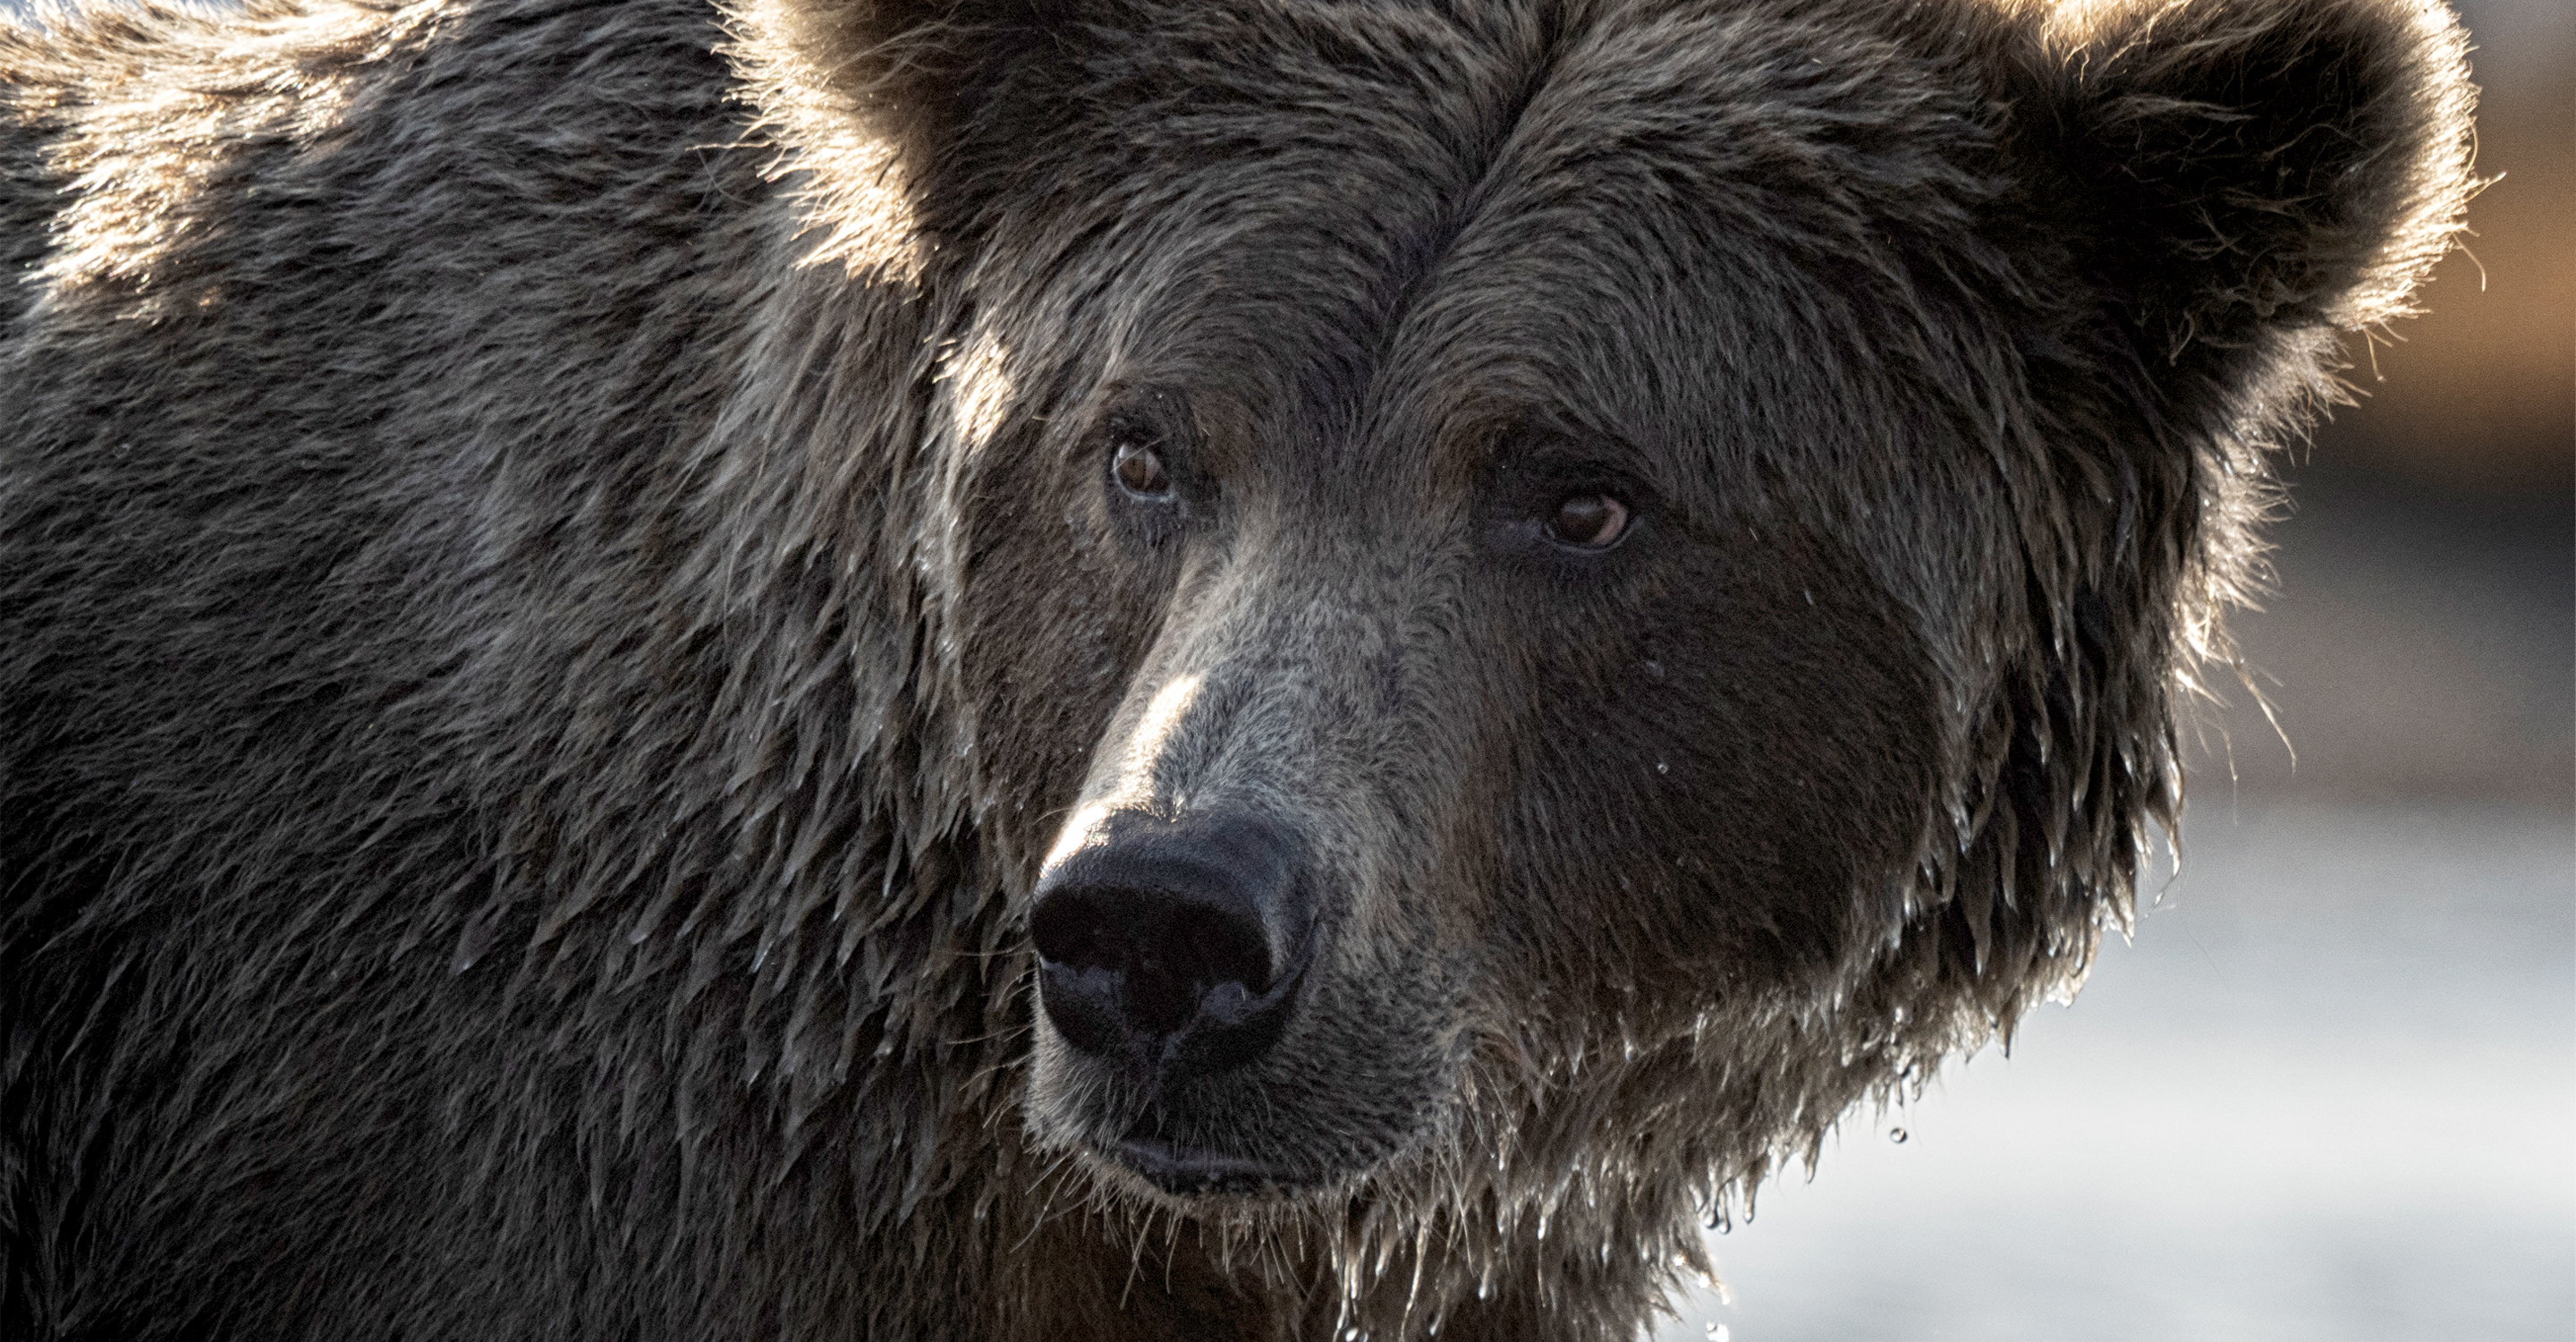 A close up of a brown bear's face in Katmai National Park, Alaska, USA